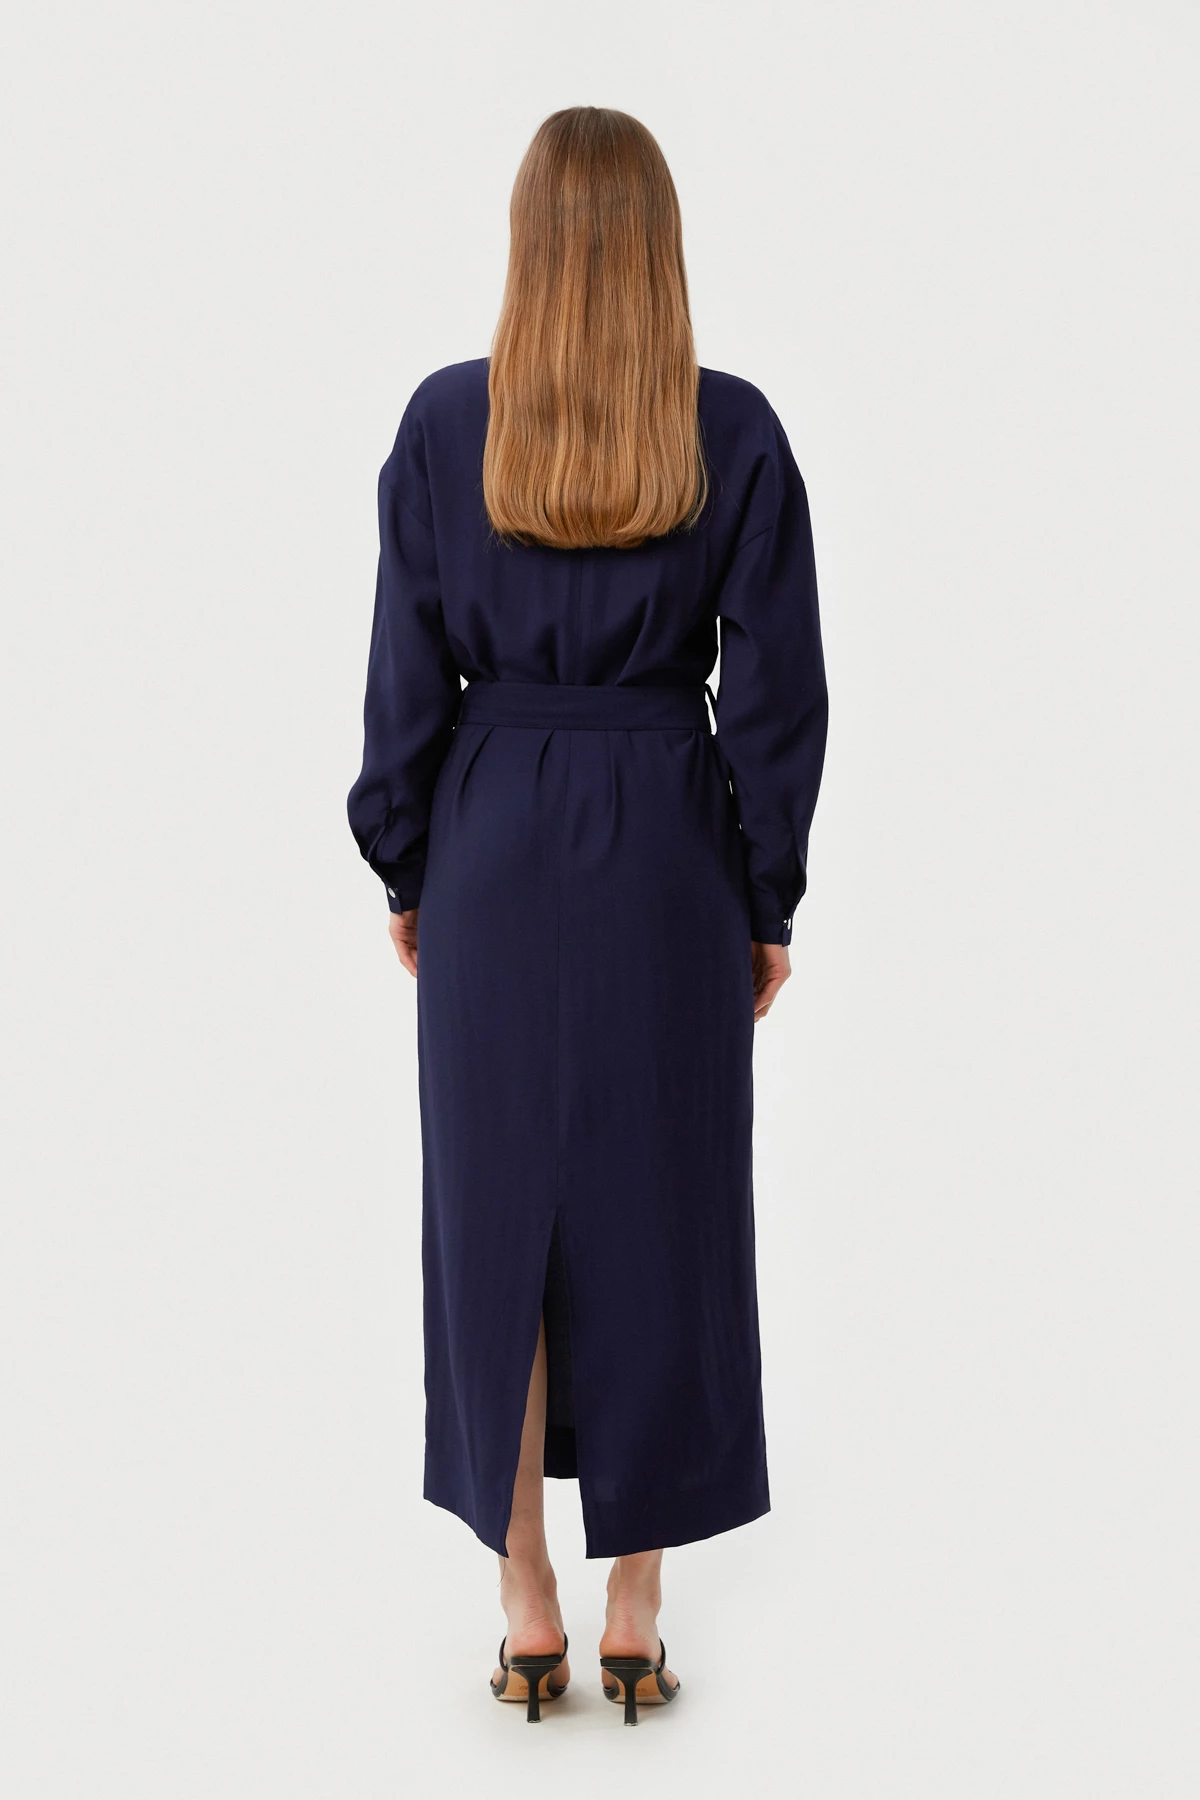 Navy blue straight-cut elongated midi dress made of viscose, photo 4